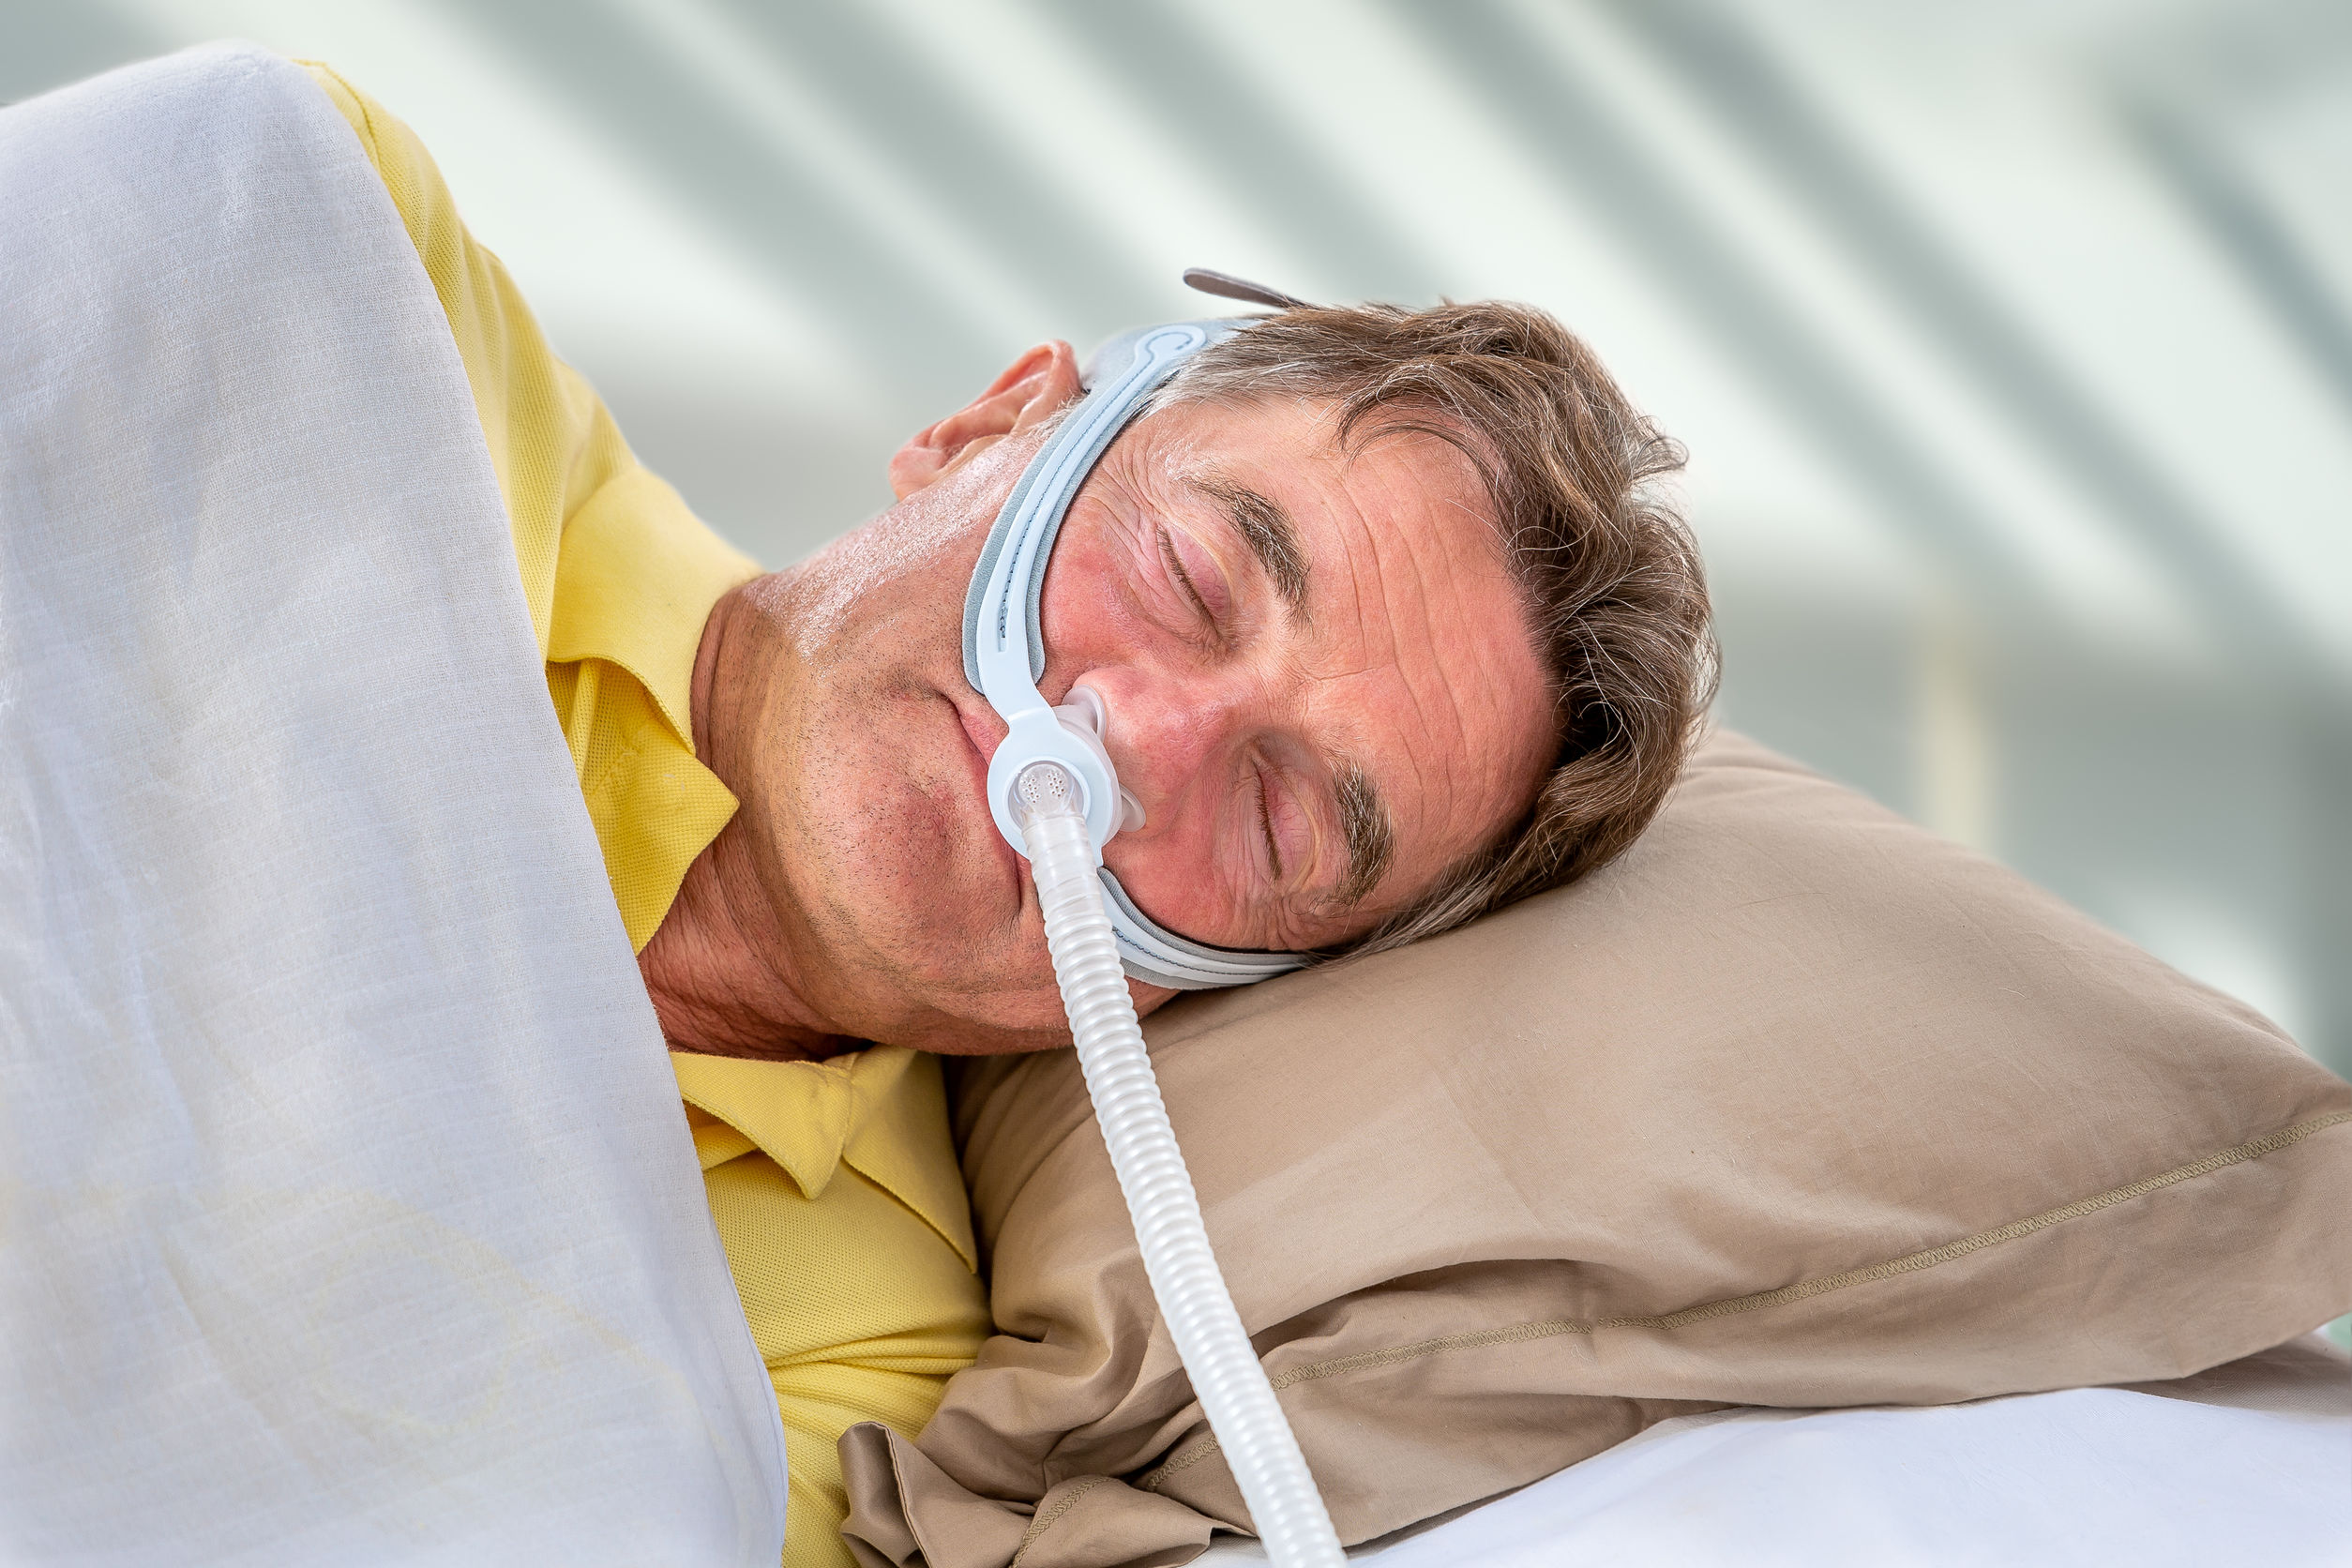 Critical tips on sleep apnea you shouldn’t miss